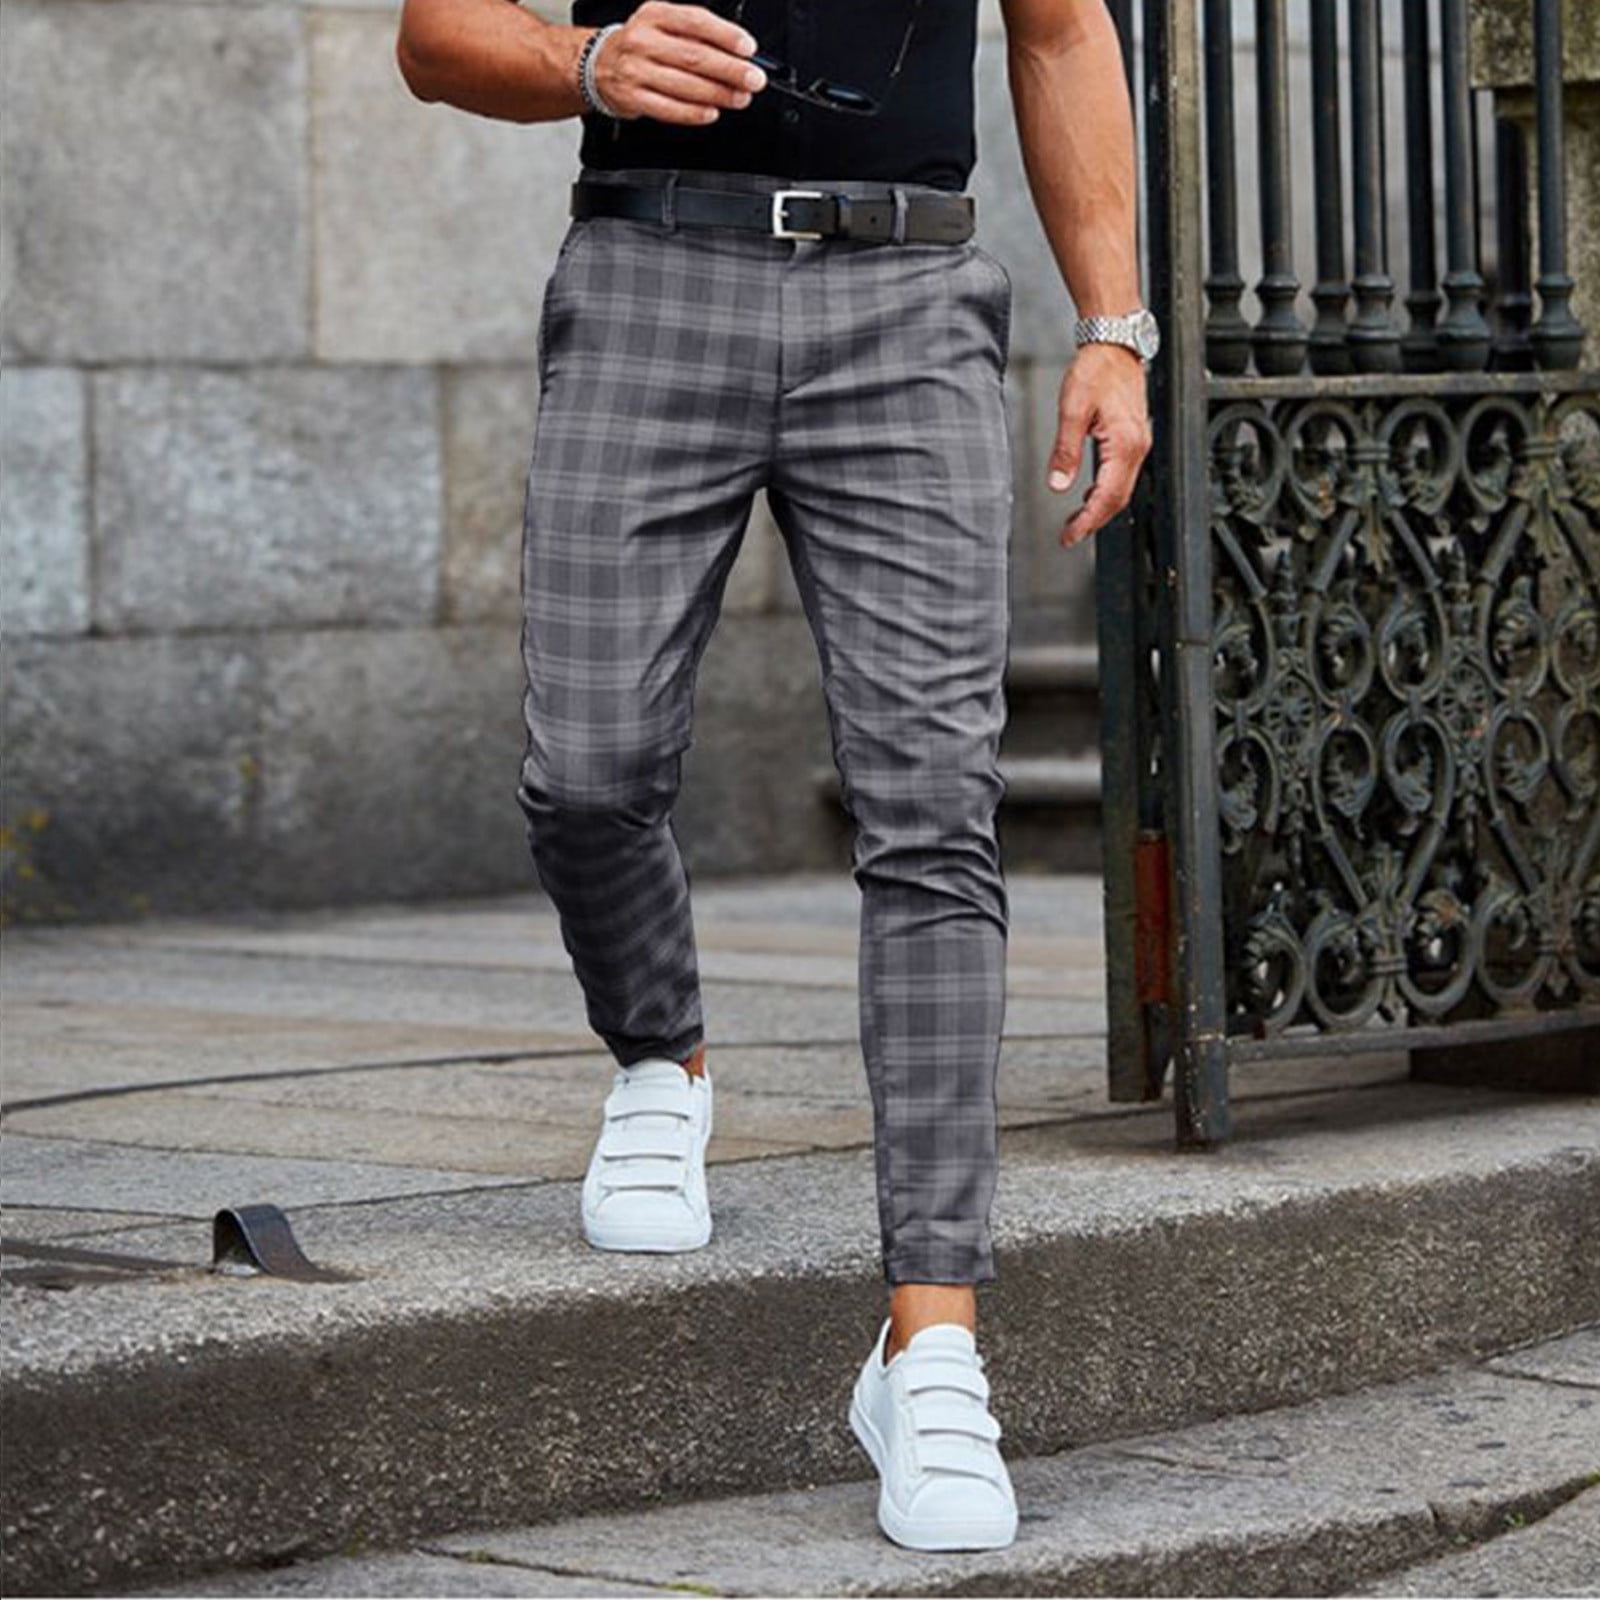 pxiakgy for men men's fashion casual loose plaid zipper trousers pants casual grey + 3xl - Walmart.com